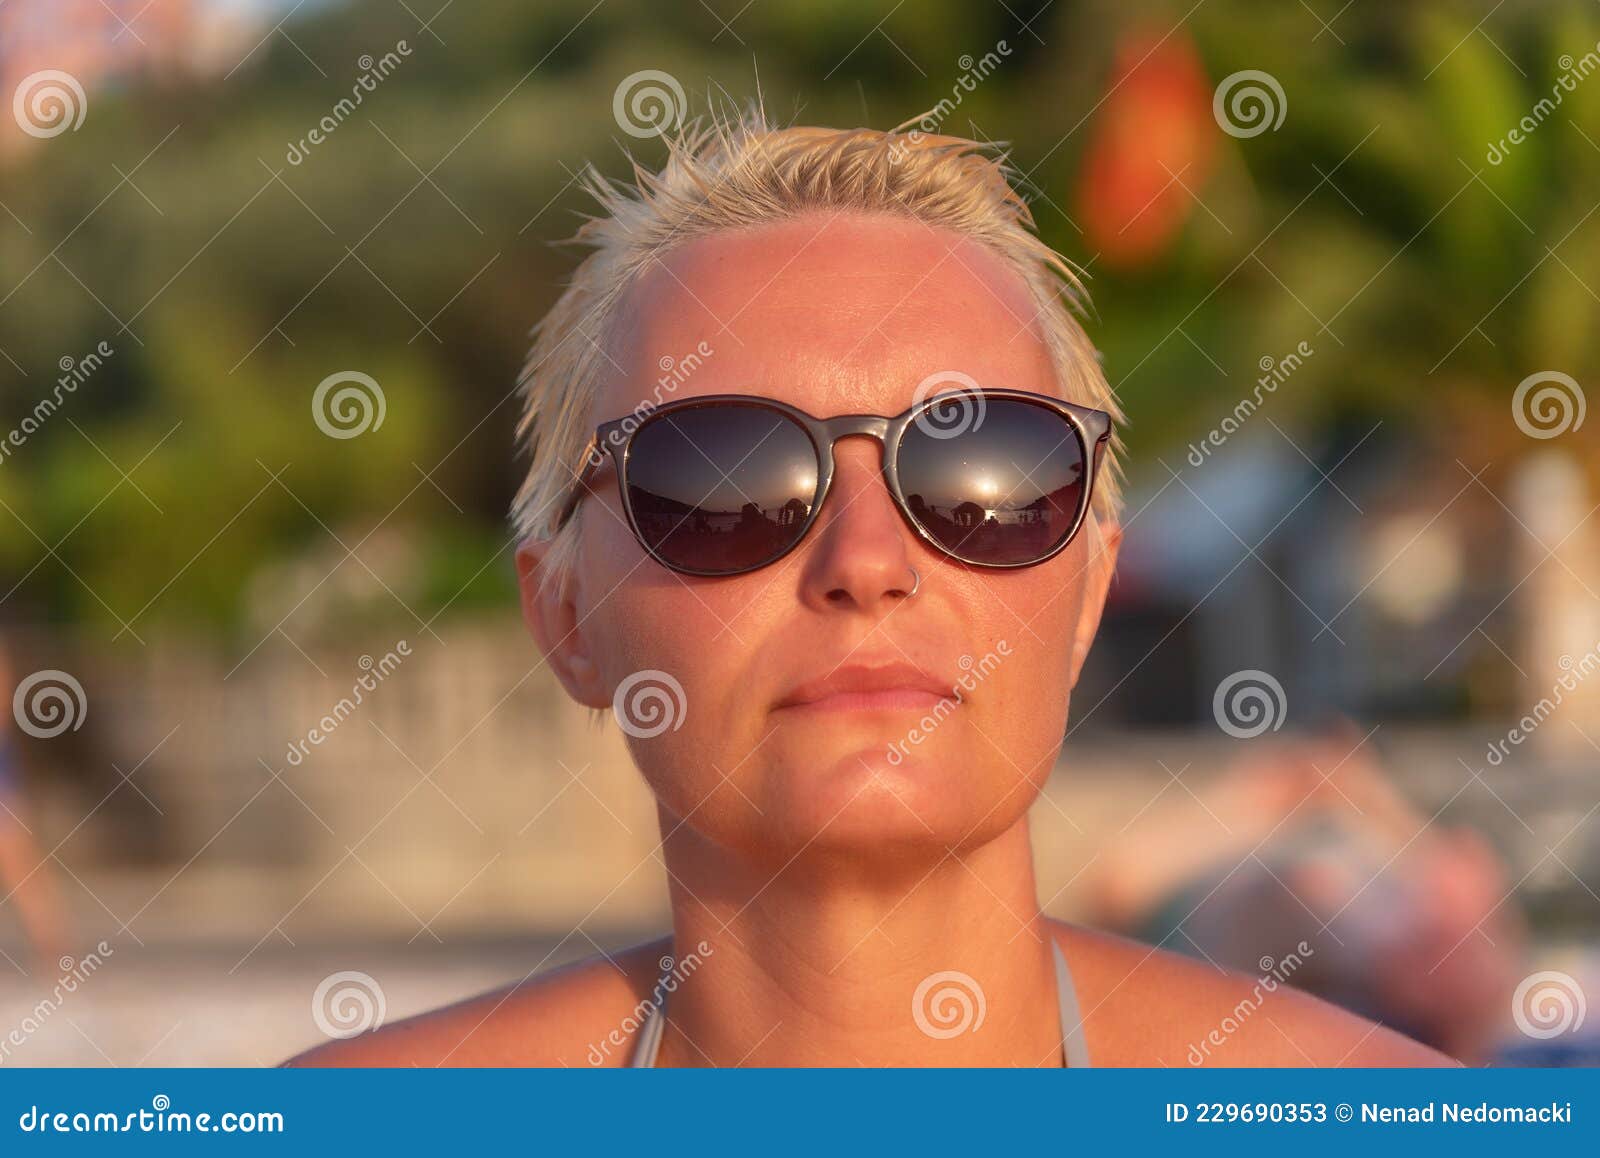 1. Short blonde hair selfie with sunglasses - wide 1